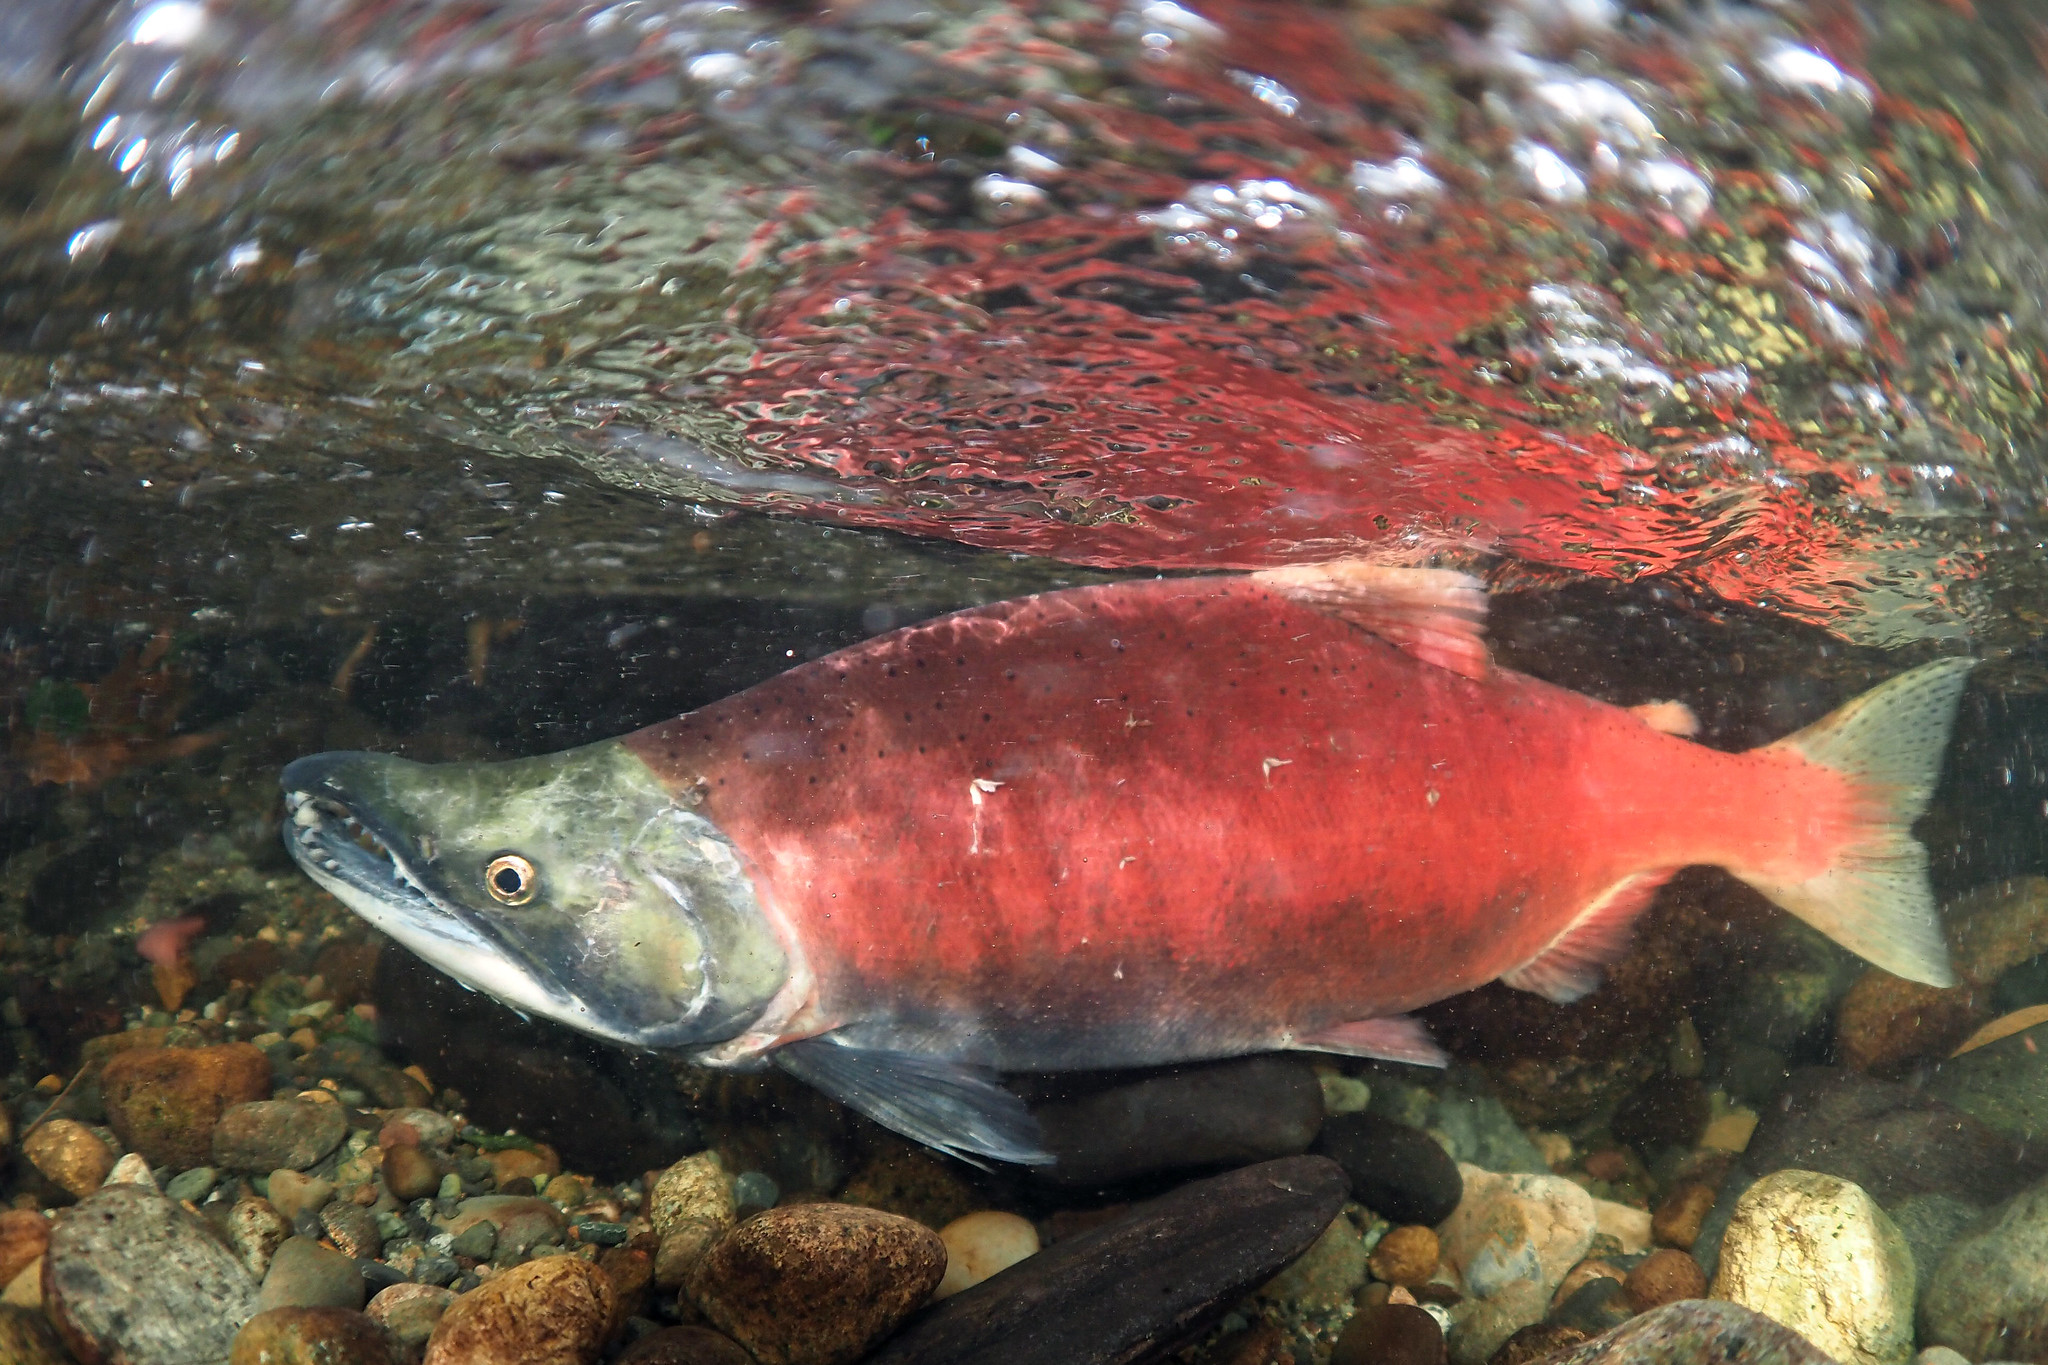 Bright red kokanee salmon swims in shallow water